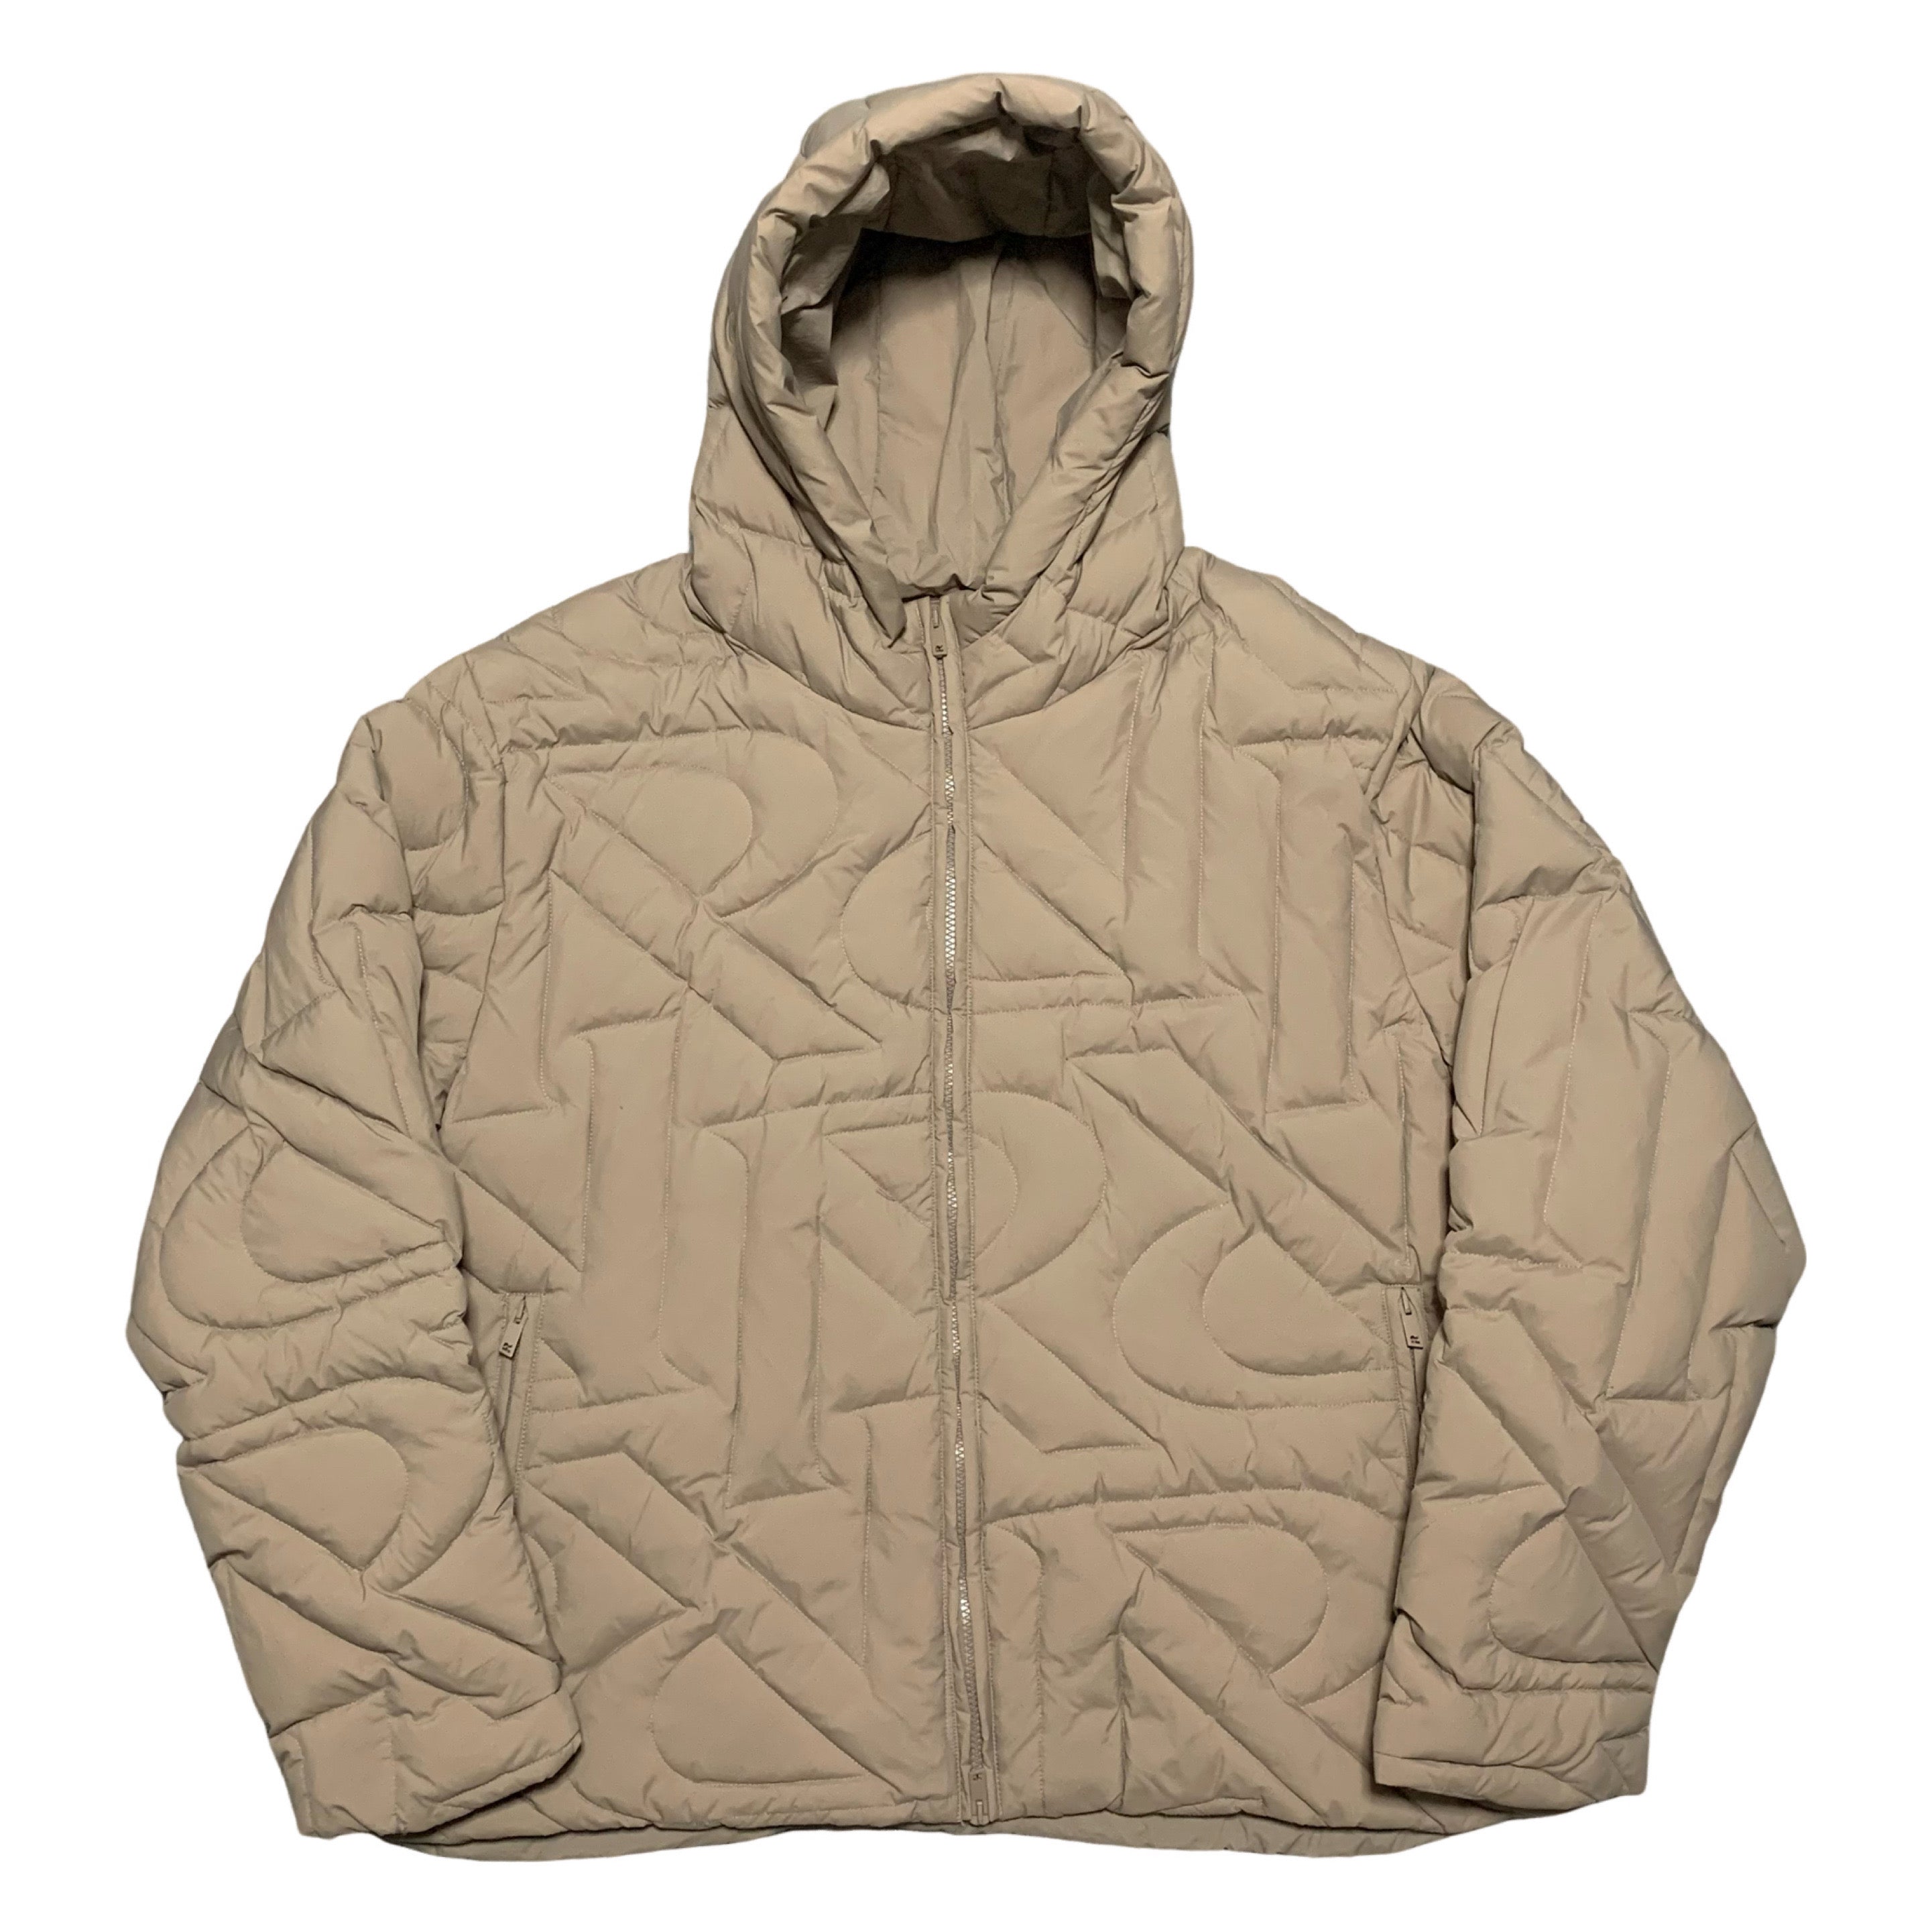 Represent XL Jacket Initial Lightweight Hooded Puffer Jacket Mushroom Brown